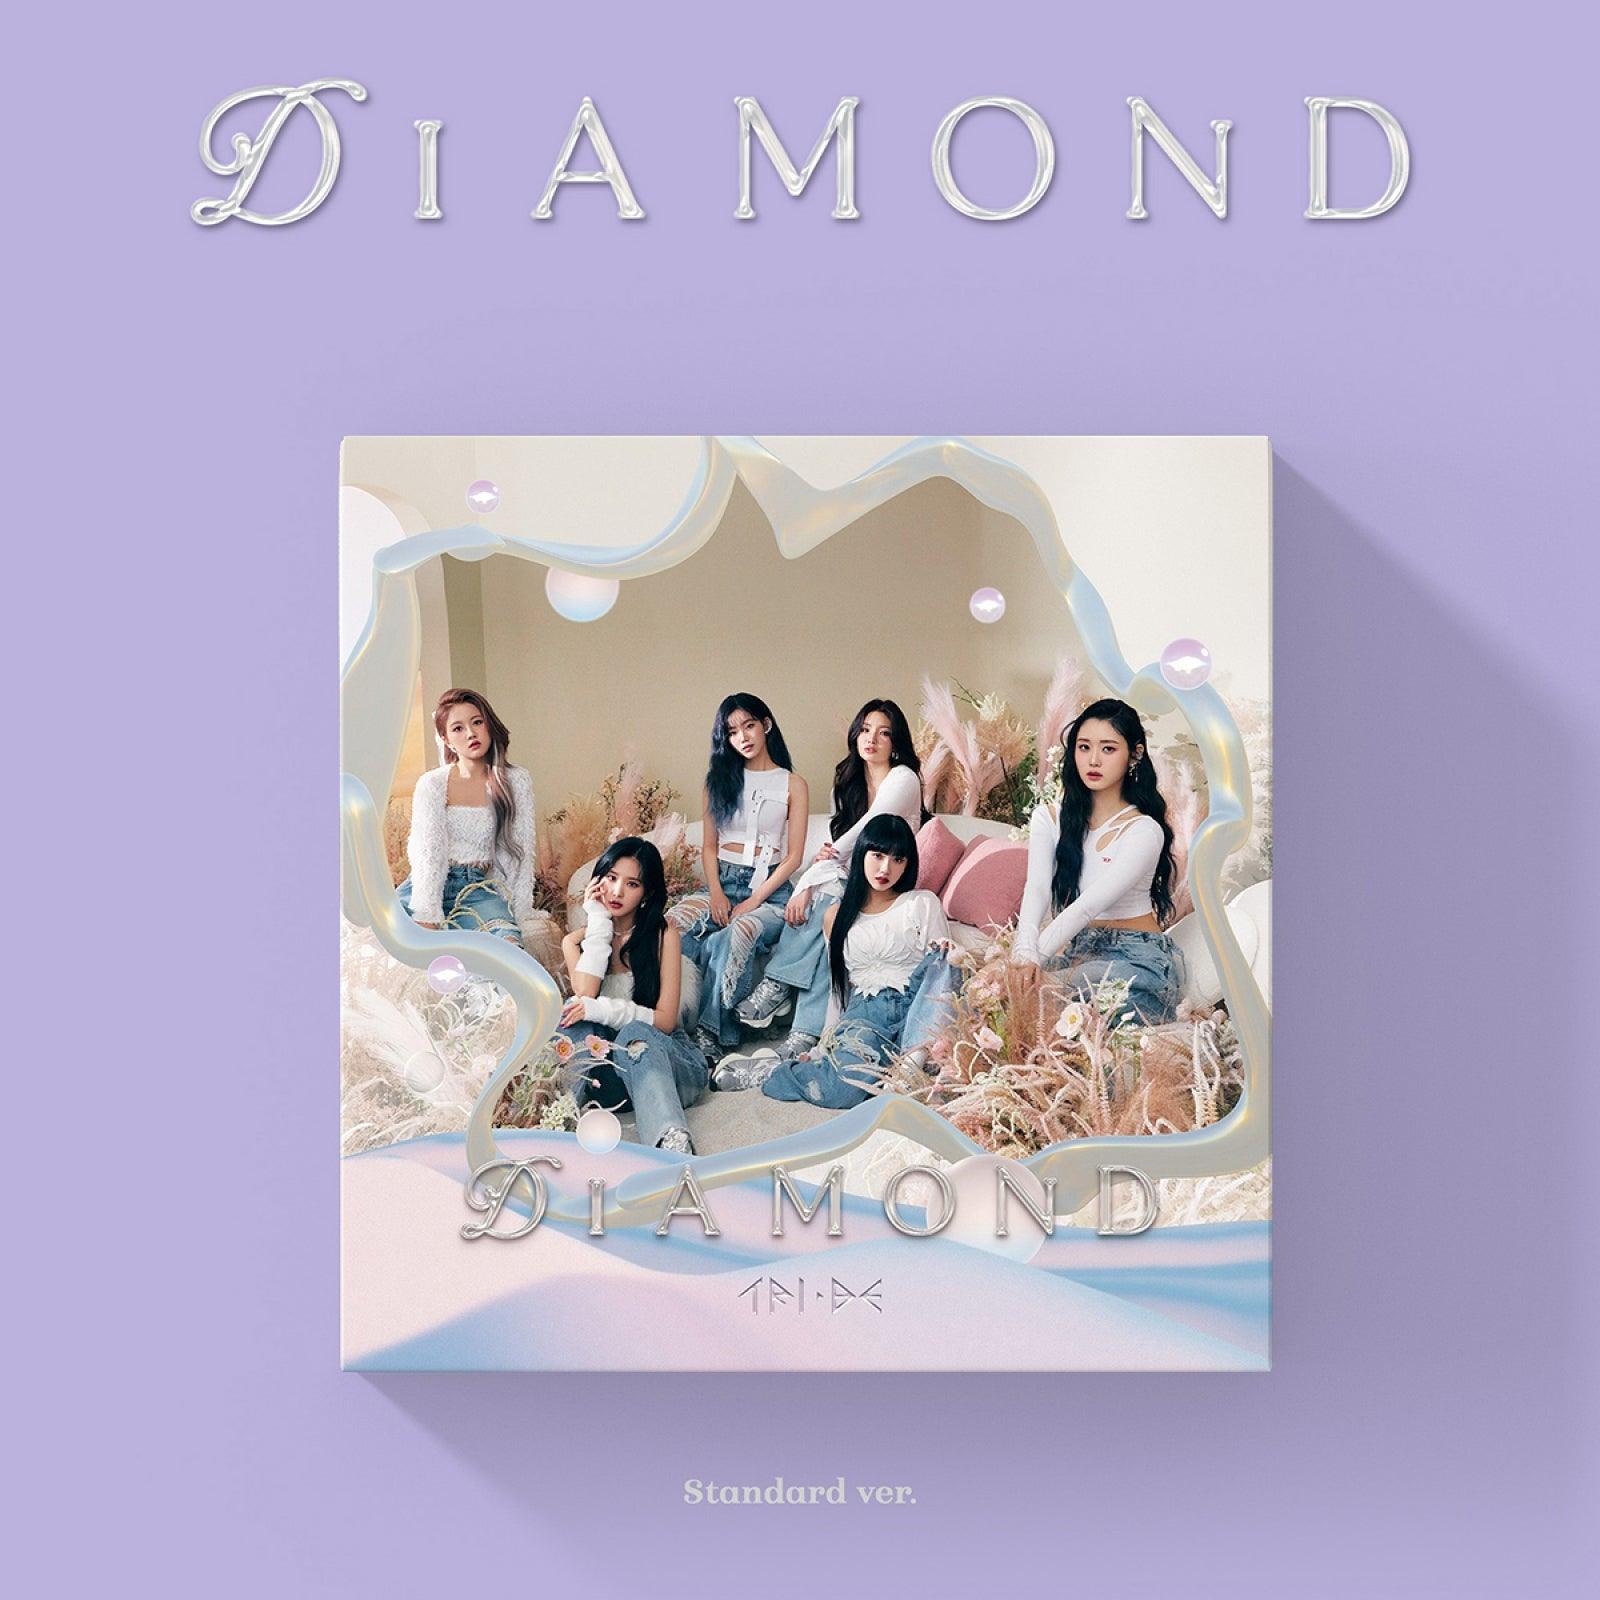 TRI.BE - DIAMOND / THE 4TH SINGLE ALBUM - Shopping Around the World with Goodsnjoy